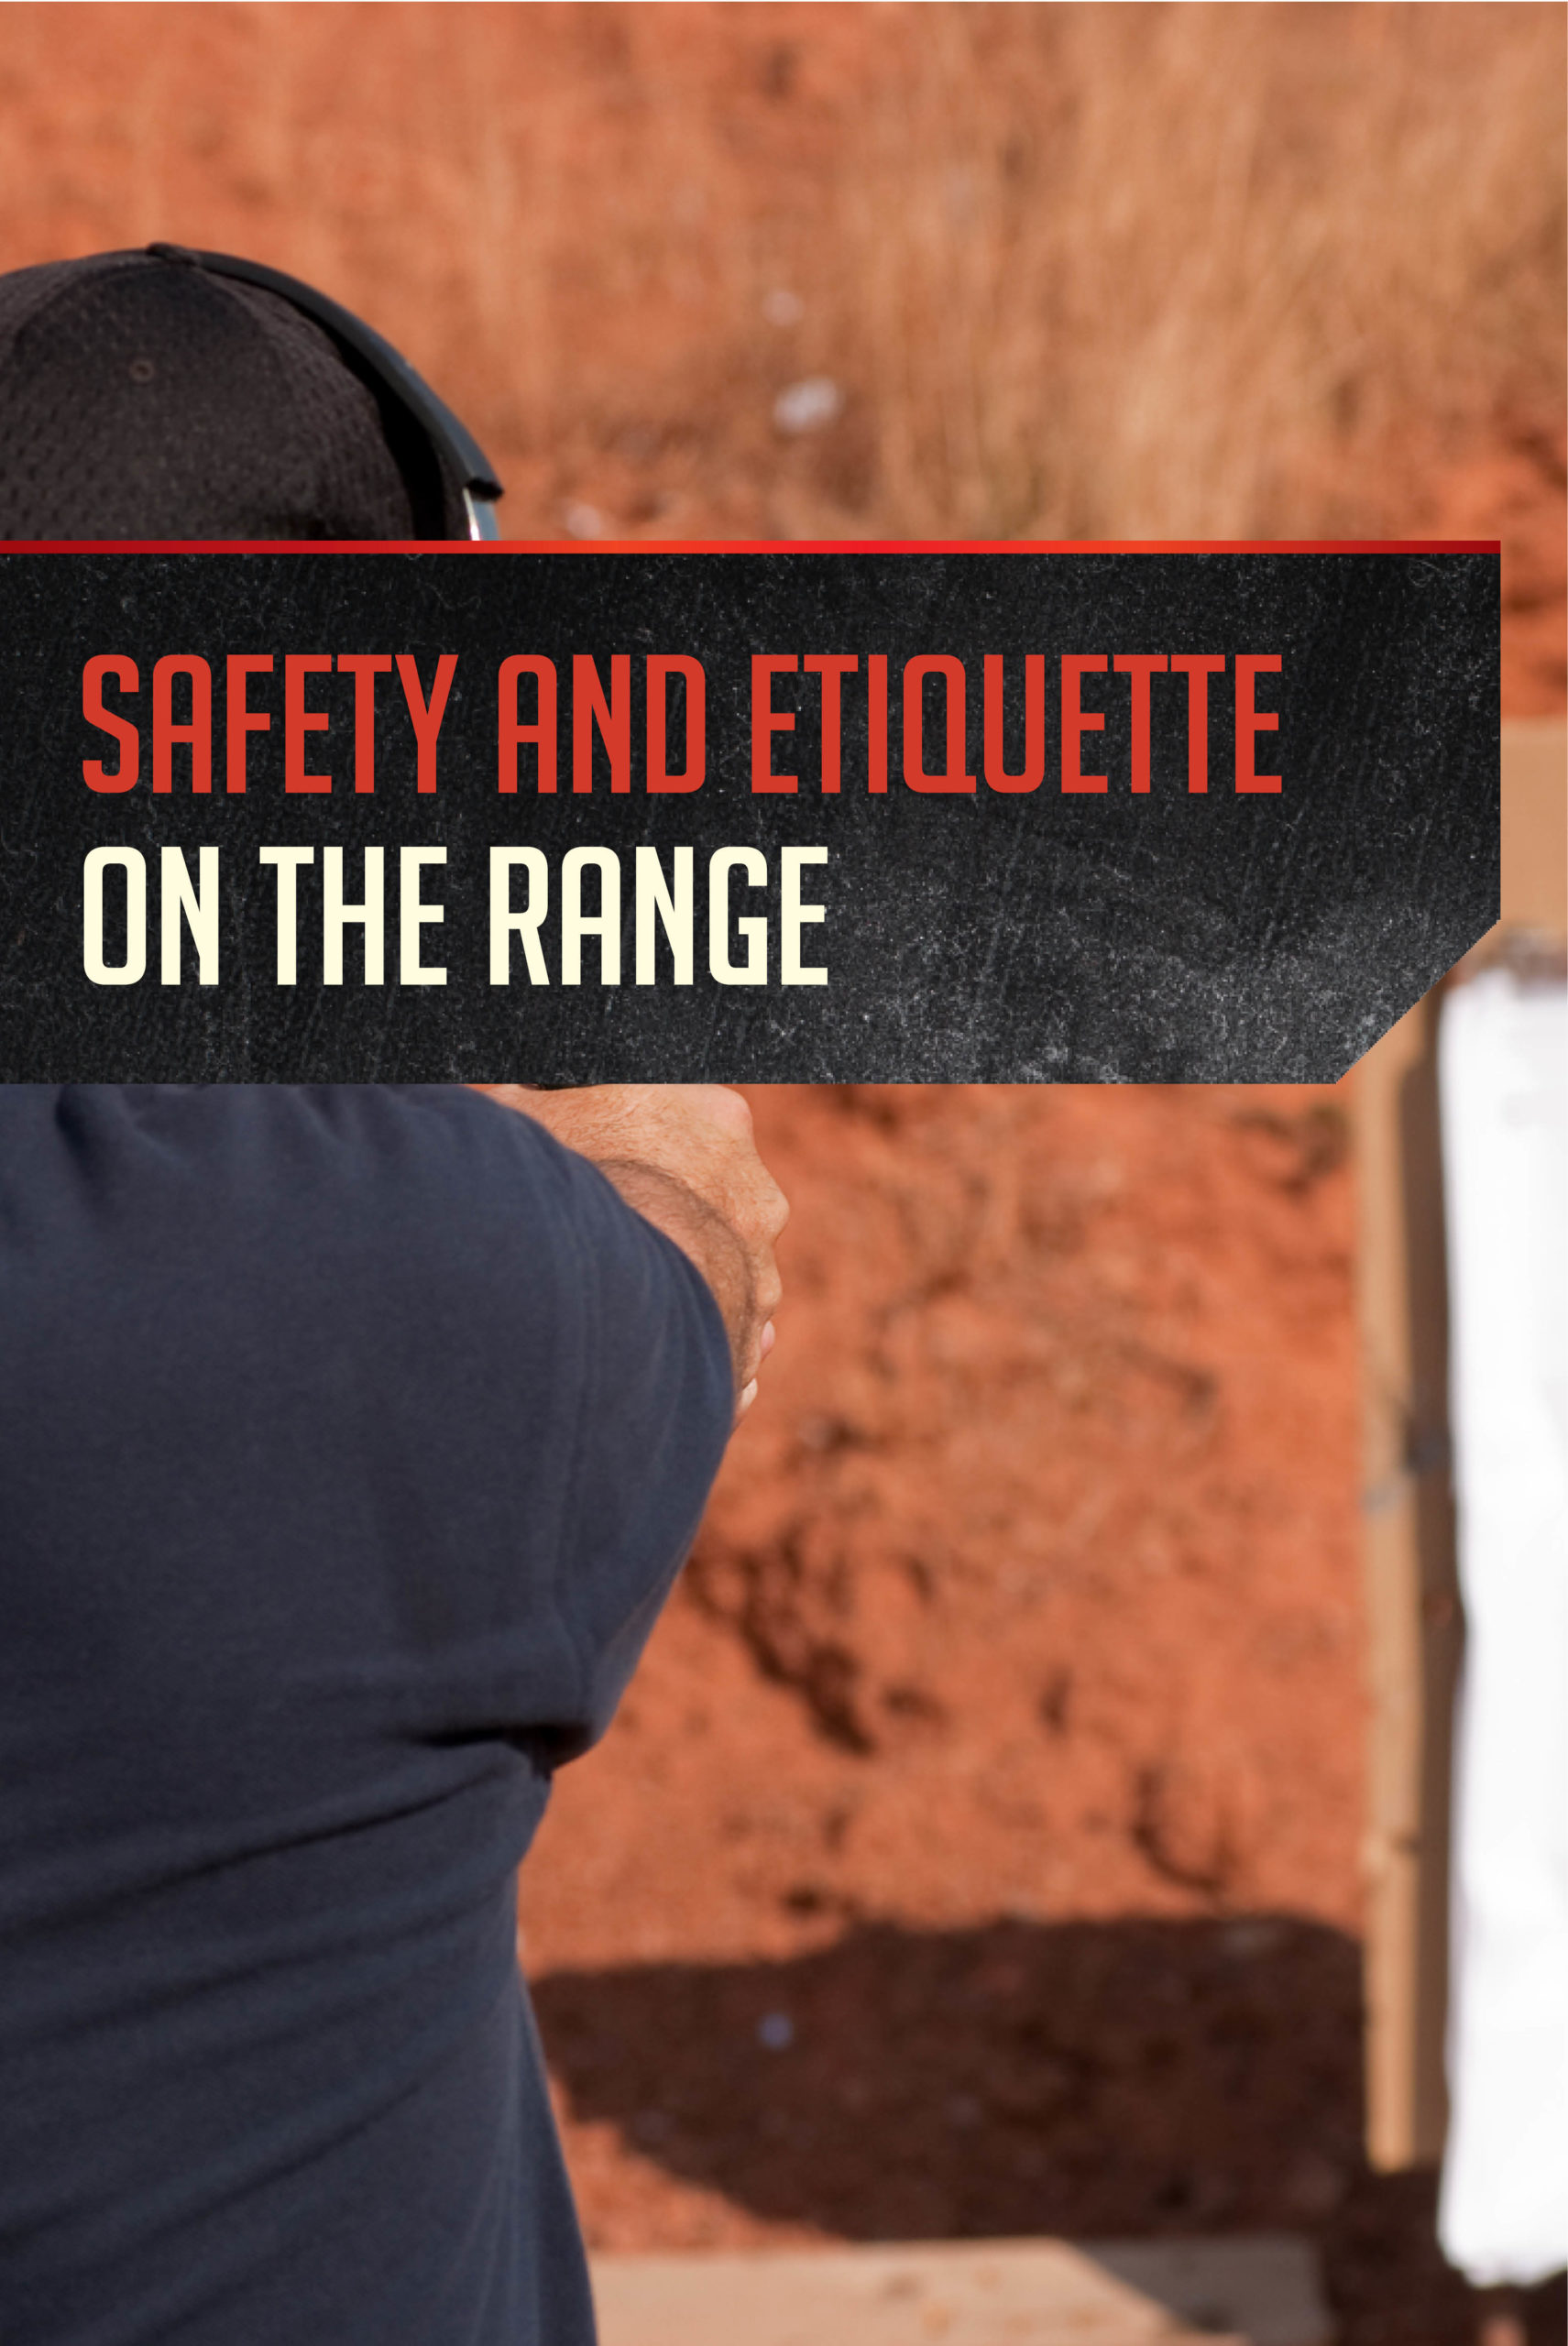 Shooting Range Safety and Etiquette pt. 1 by Gun Carrier at https://guncarrier.com/shooting-range-safety-etiquette